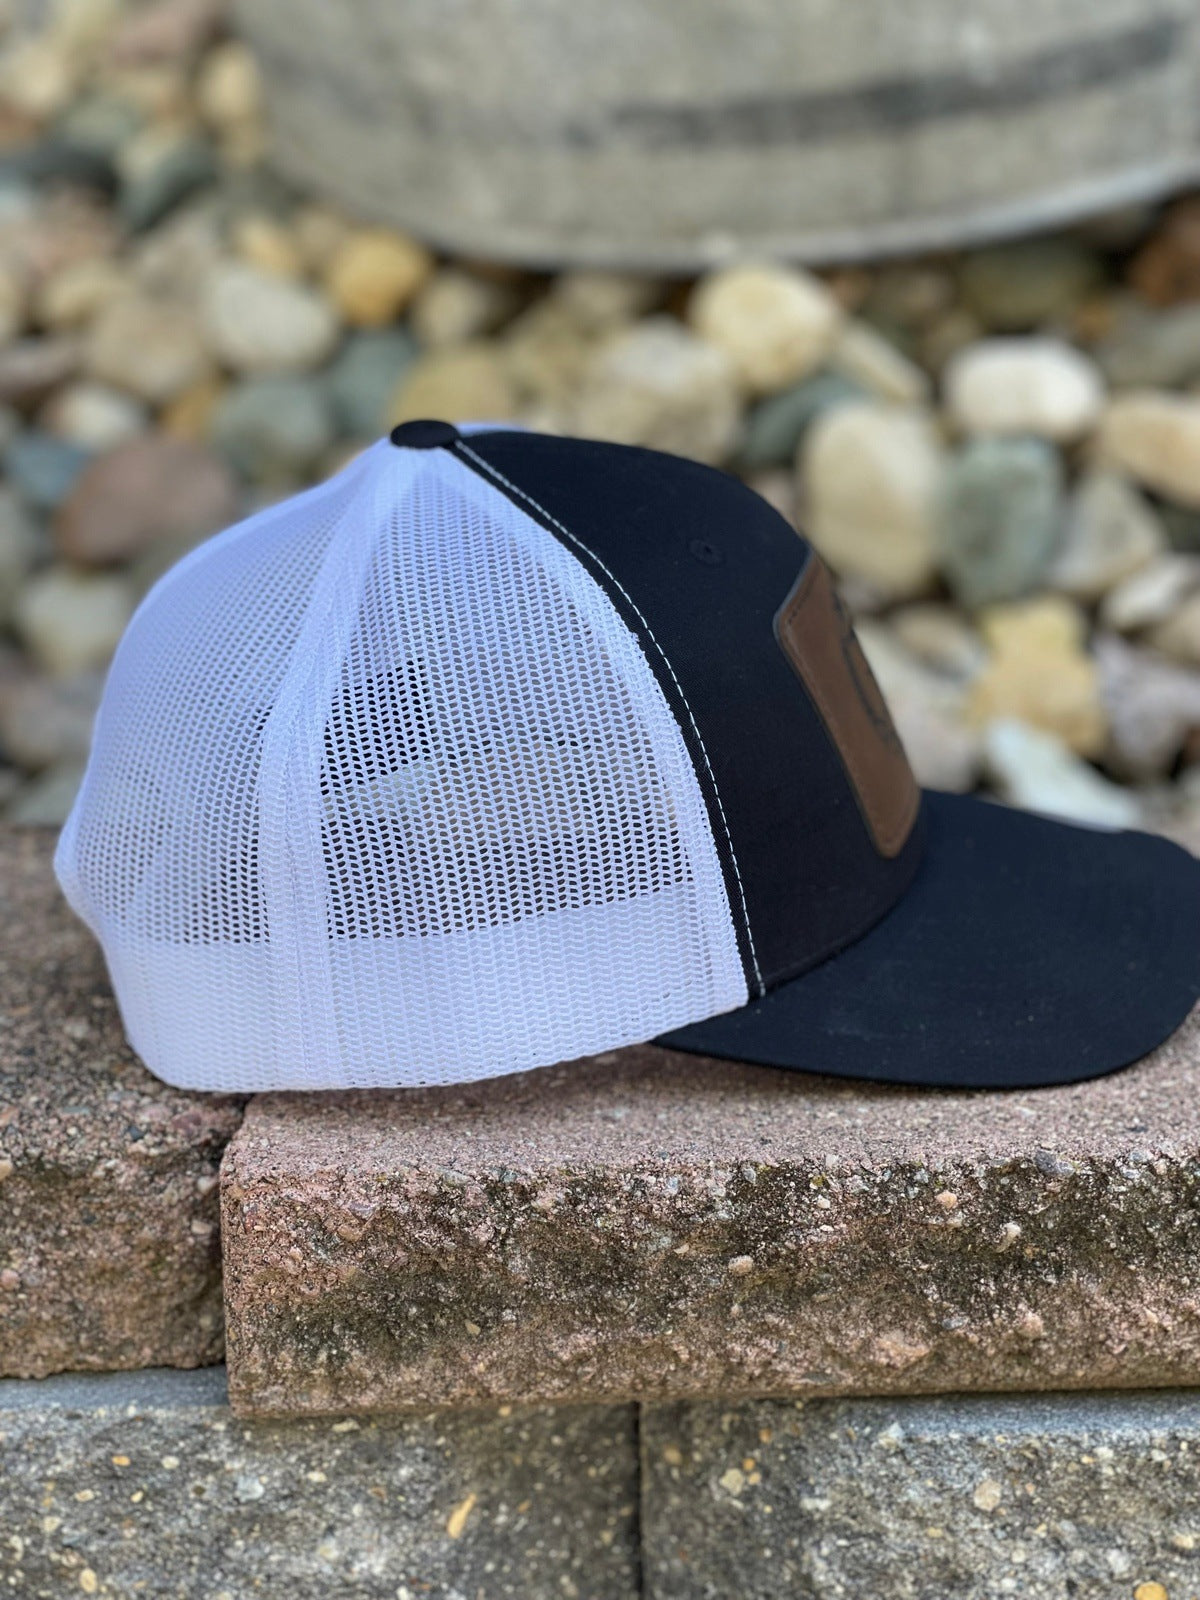 NRA Laser engraved baseball hats